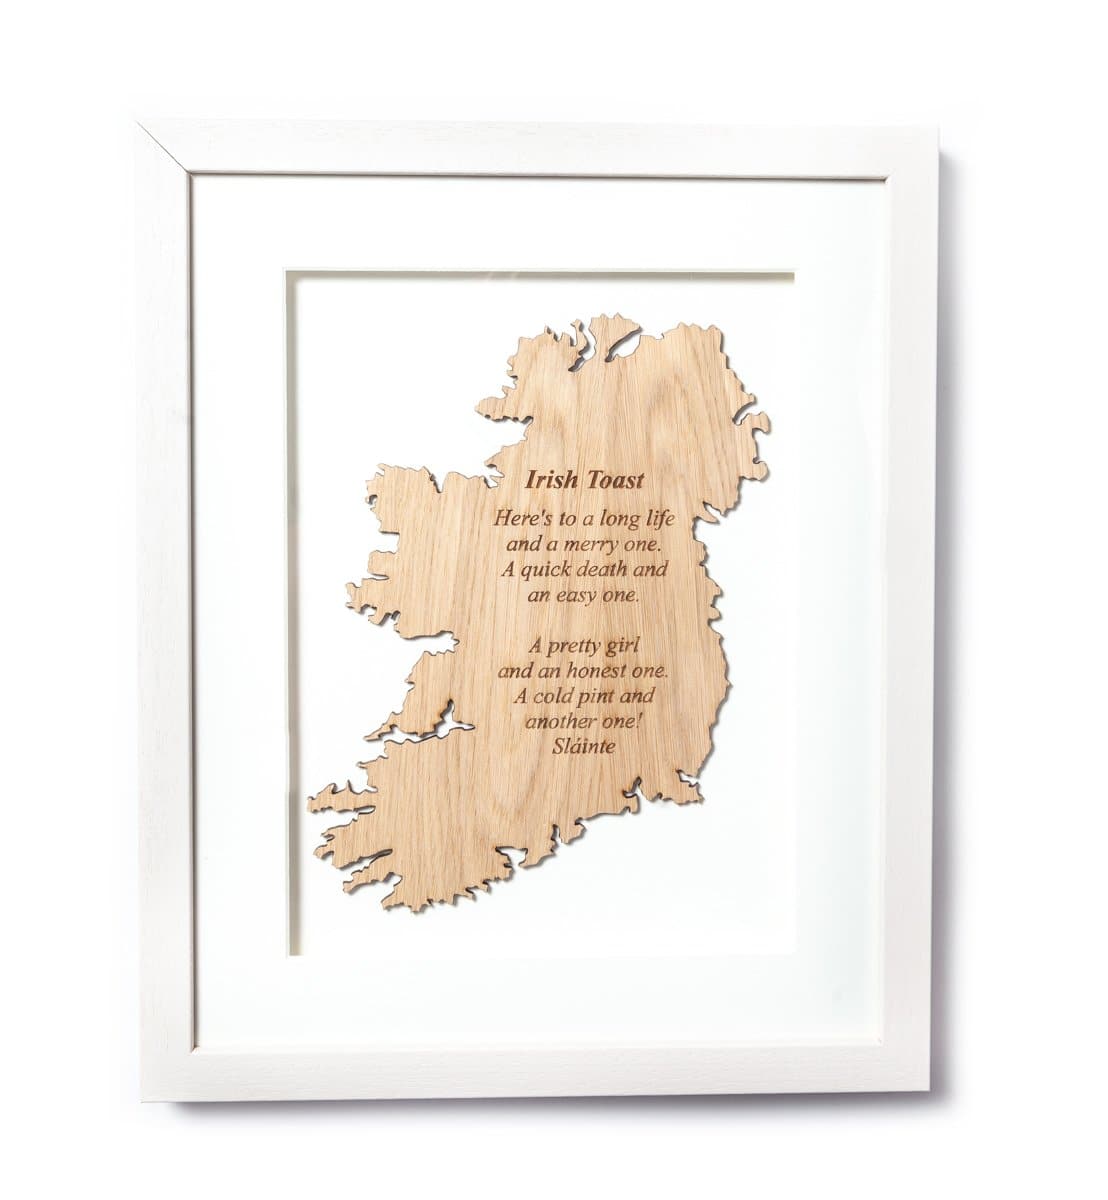 Irish Toast Wall Decor: A Toast to Heritage – Biddy Murphy Irish Gifts